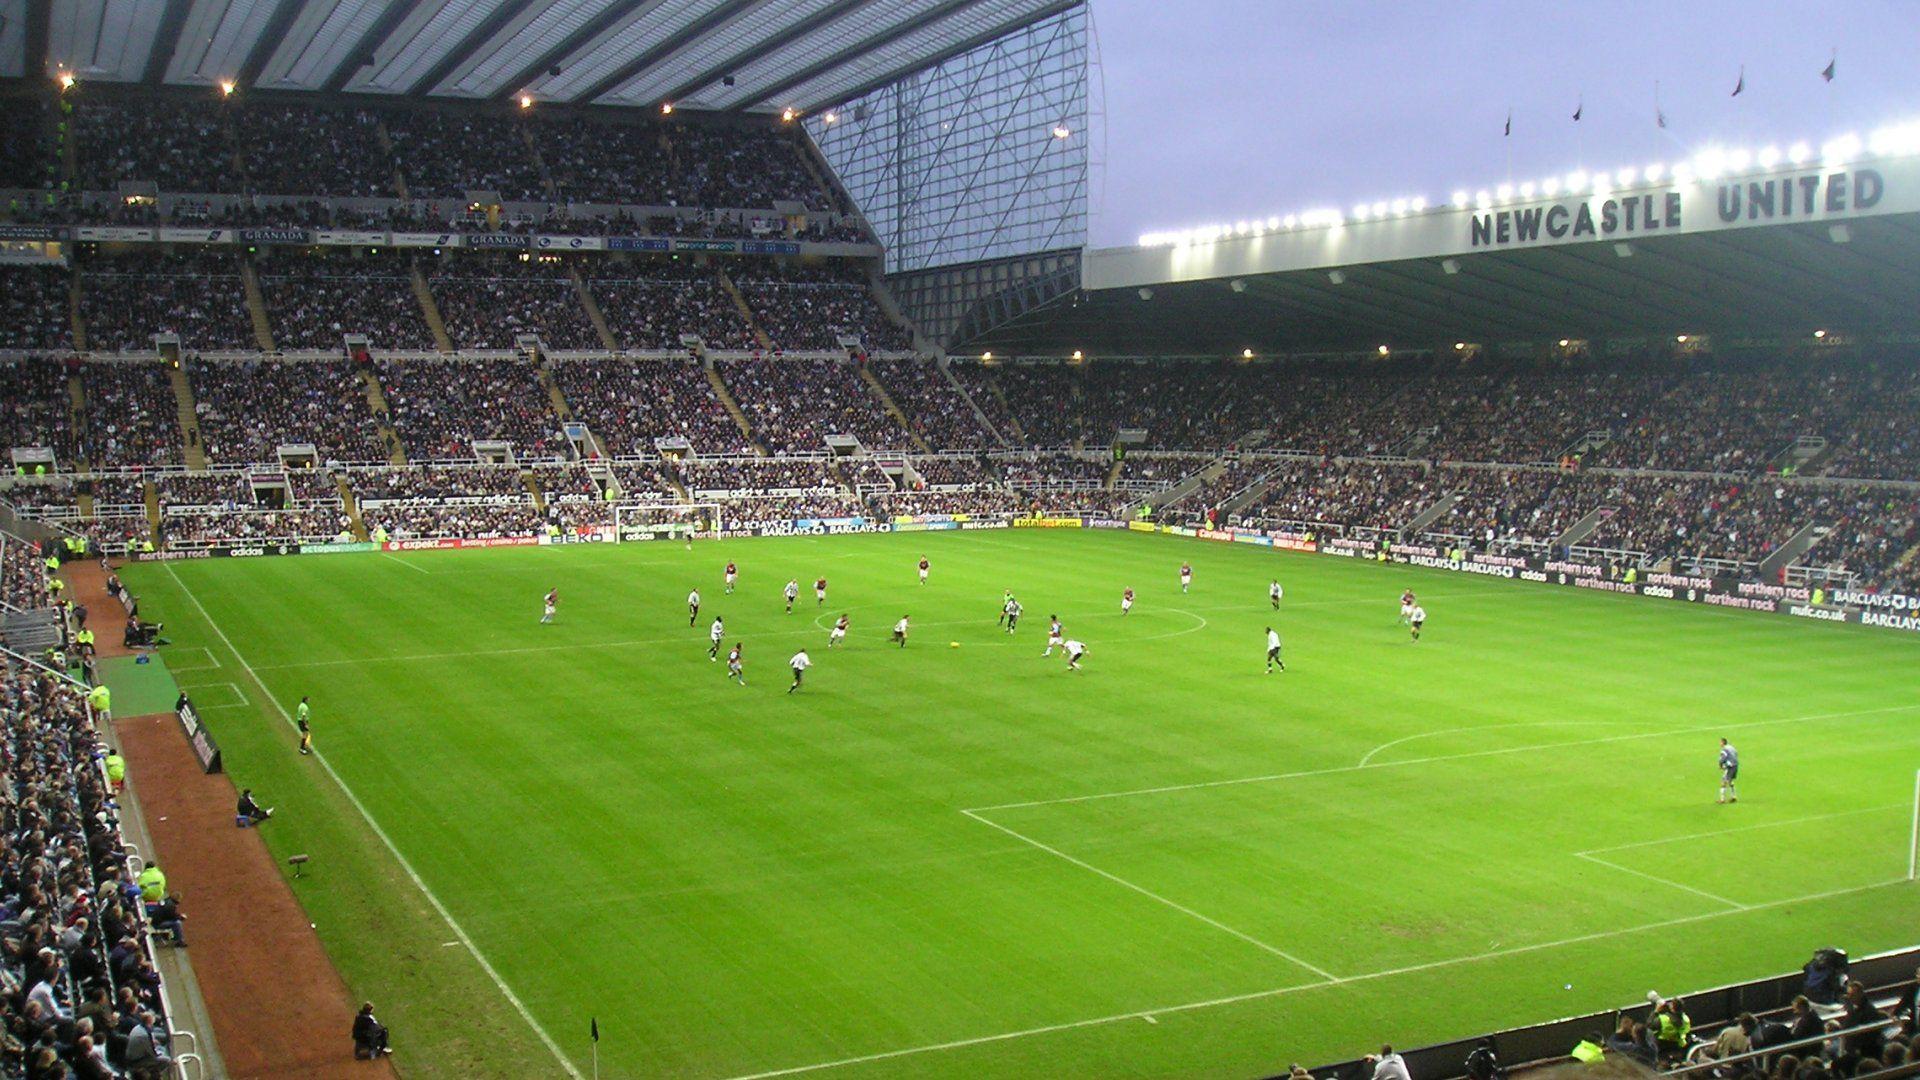 Newcastle United F.C. (Football Club) of the Barclay's Premier League